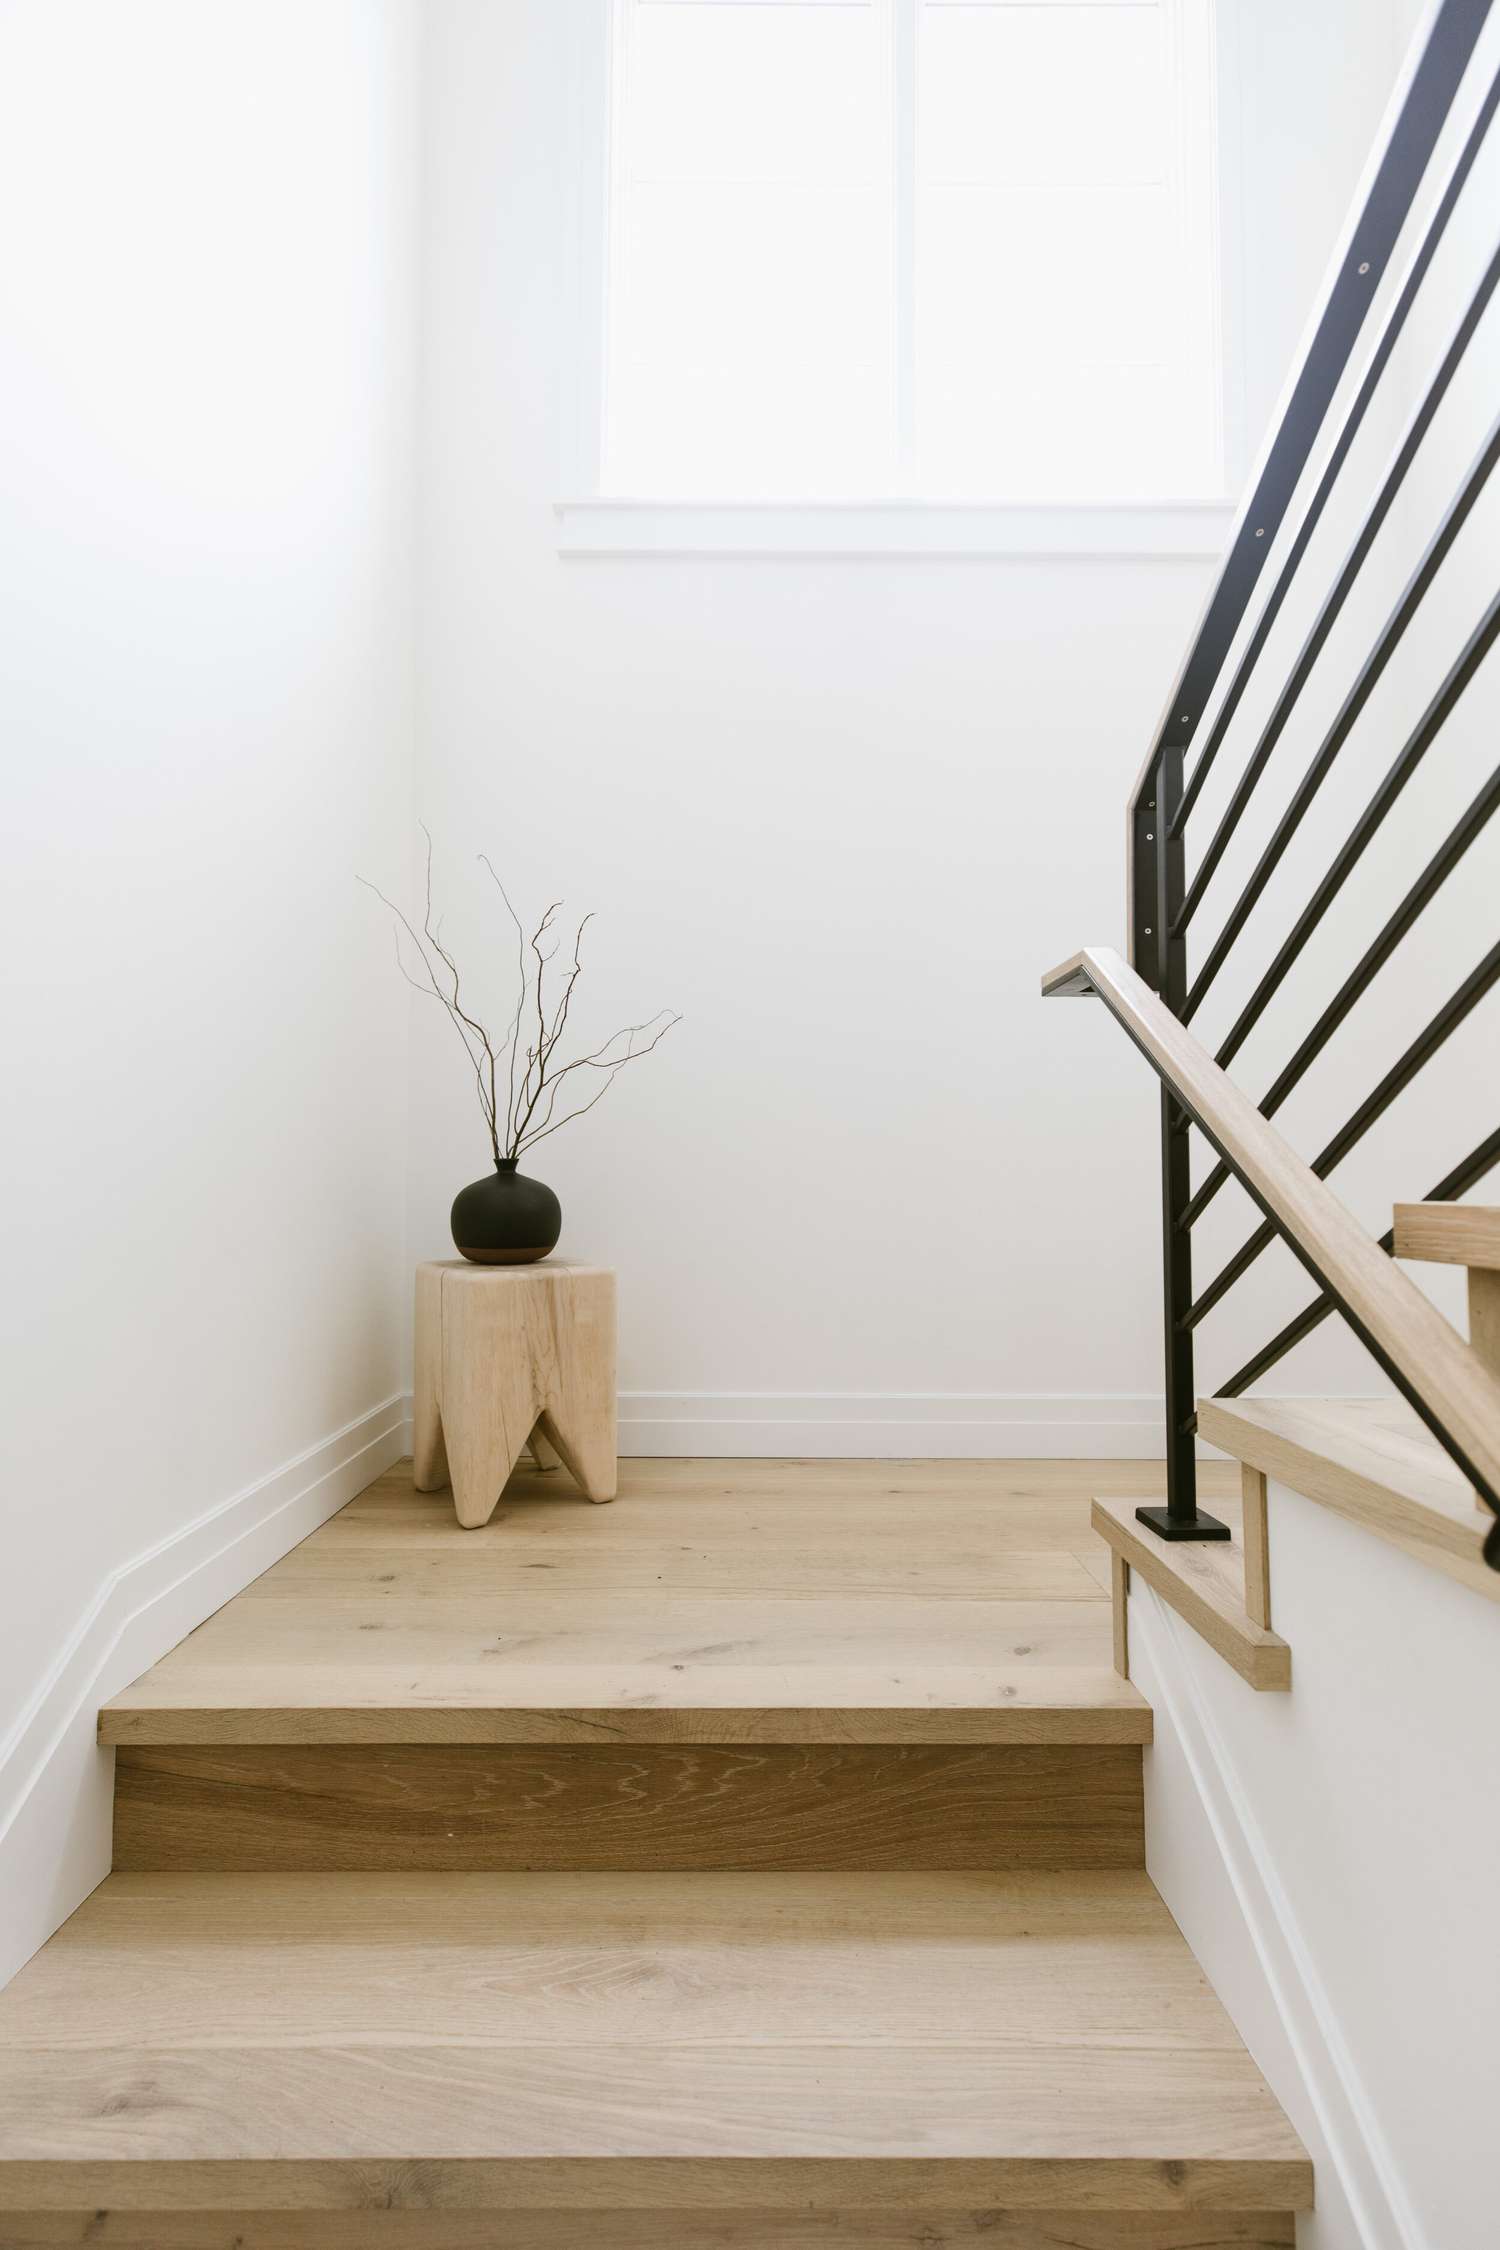 Holztreppen Ideen zeigen Sachen auf dem Treppenabsatz